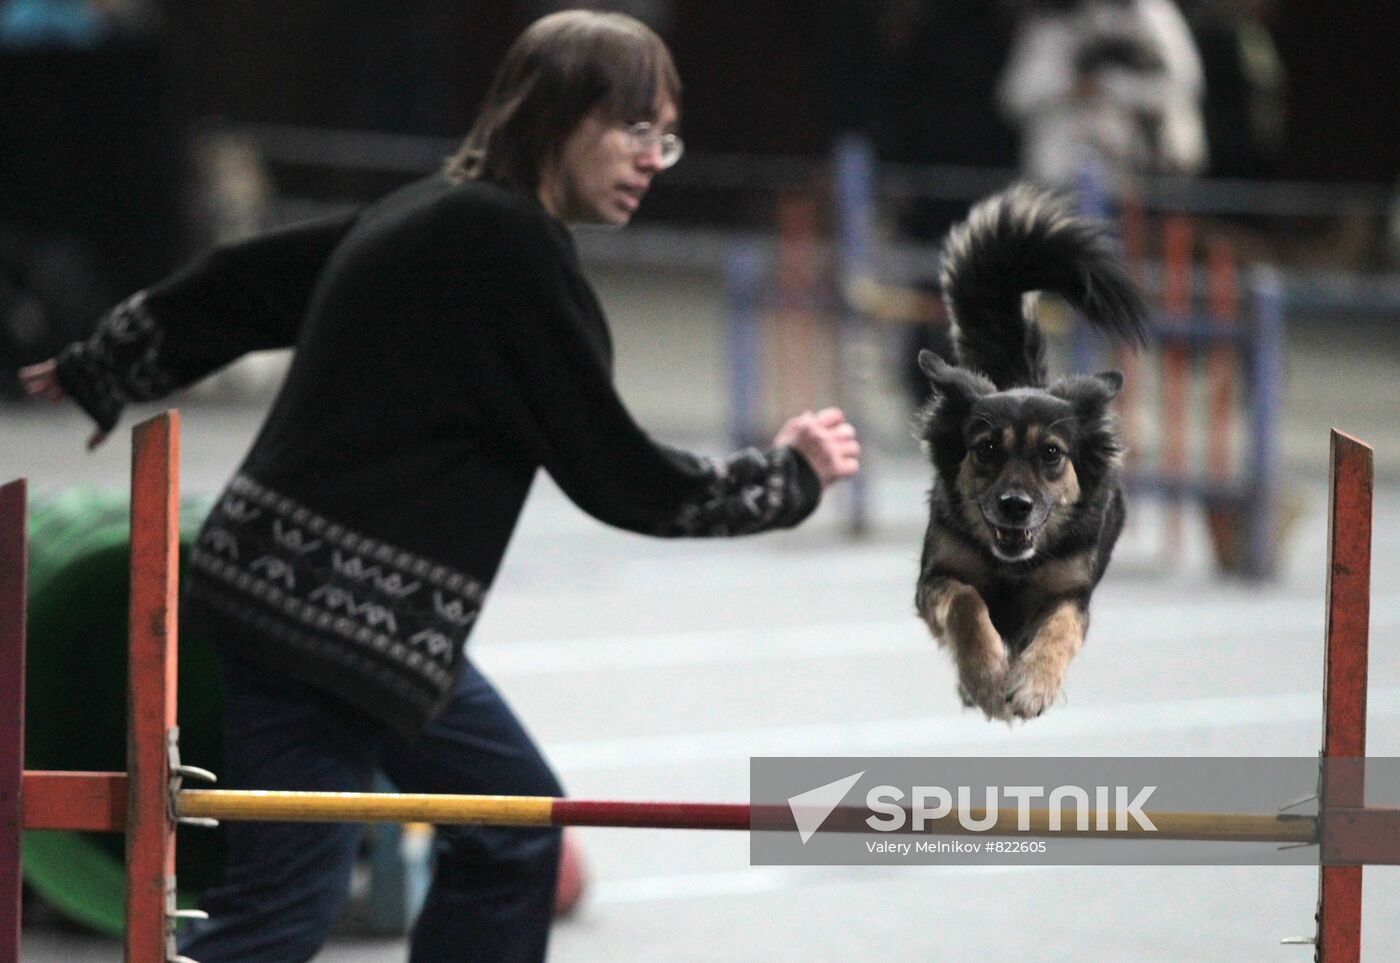 "2010 Moscow Mayor Cup" international dog show